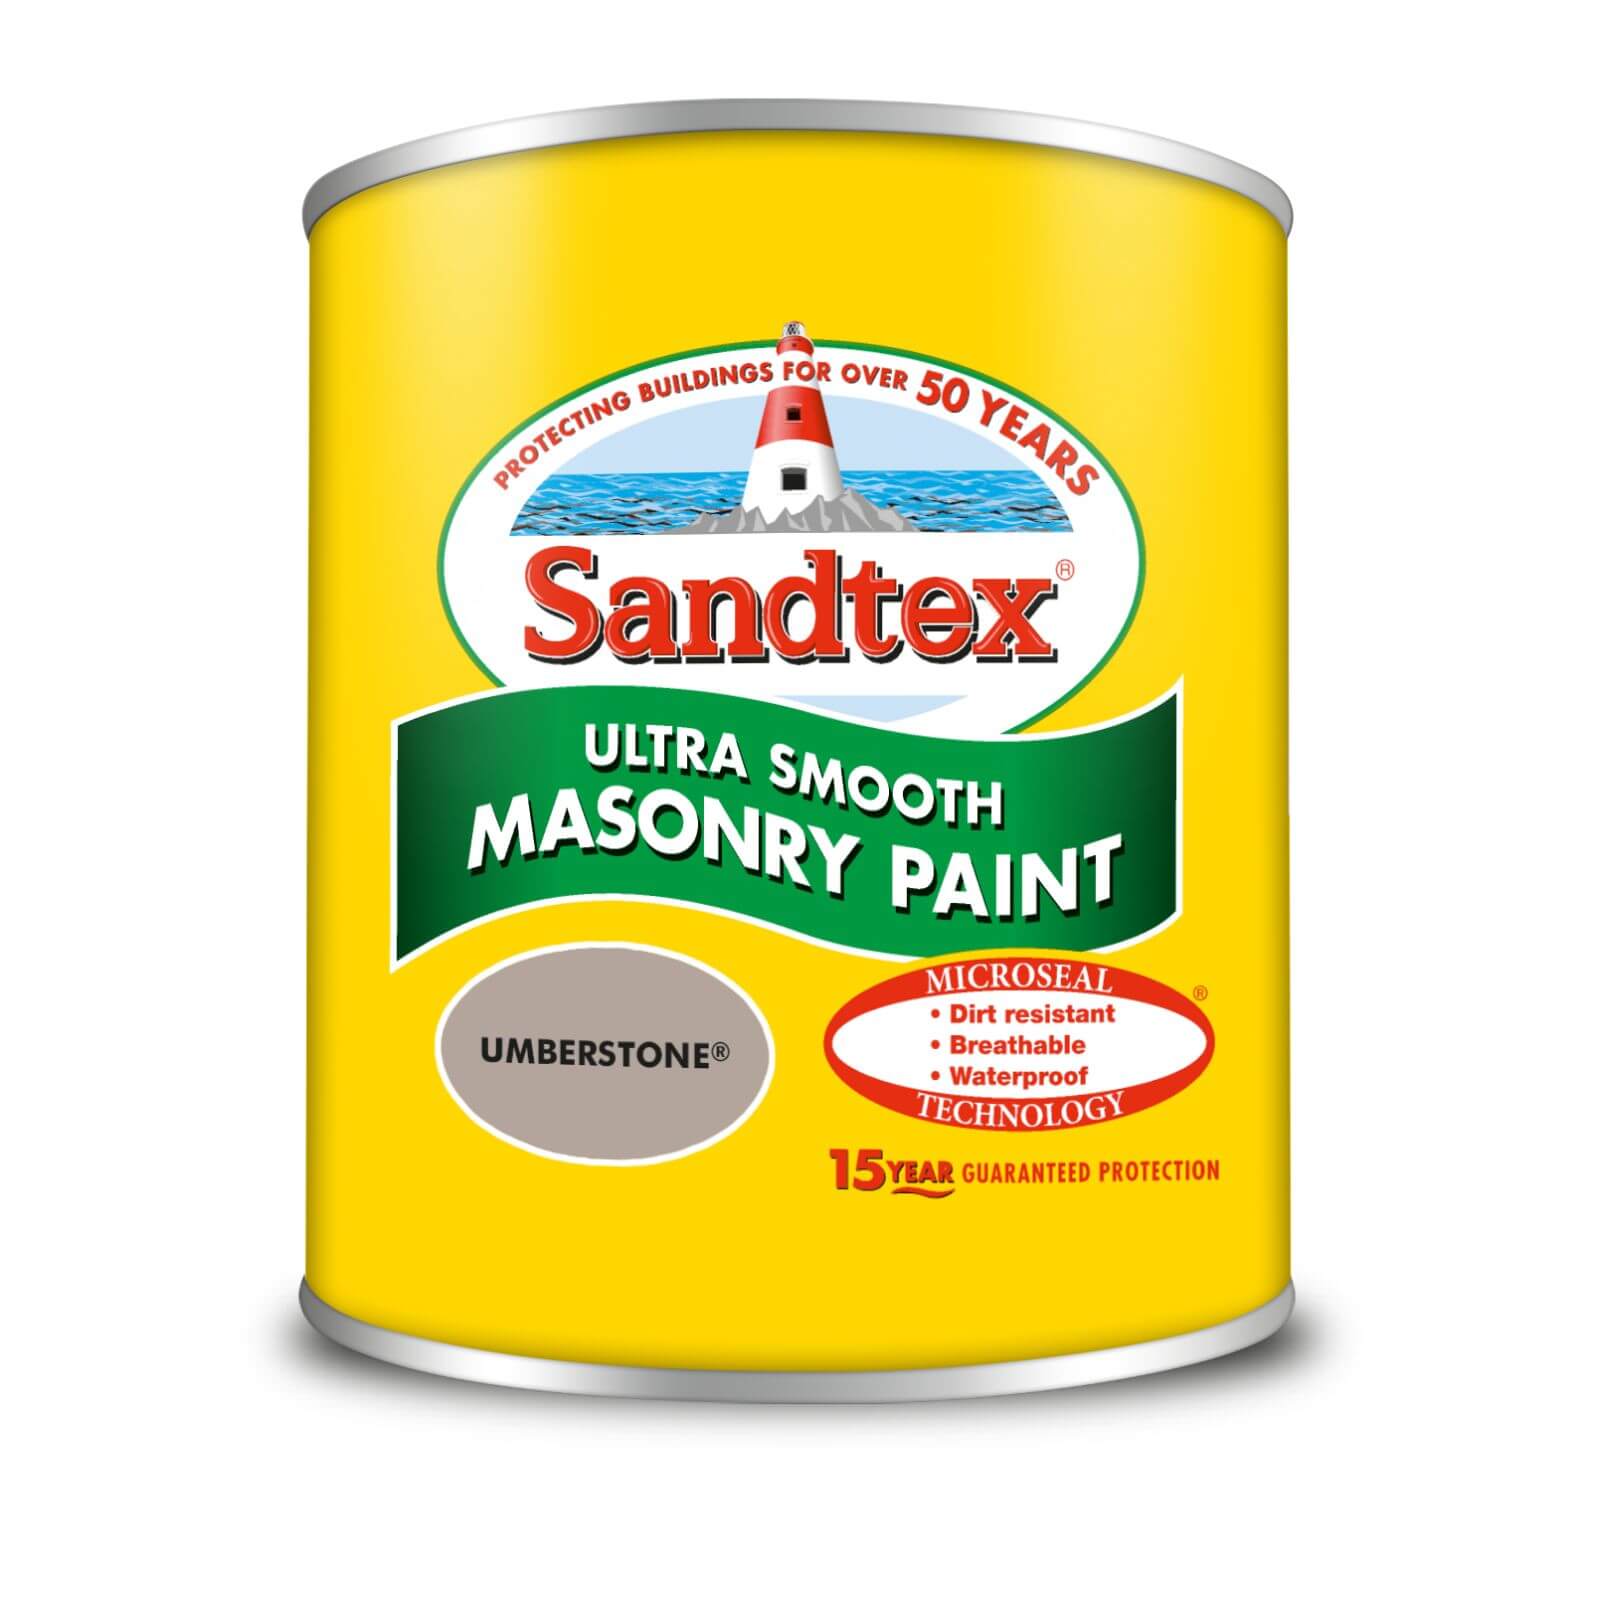 Sandtex Ultra Smooth Masonry Paint - Umberstone - 150ml